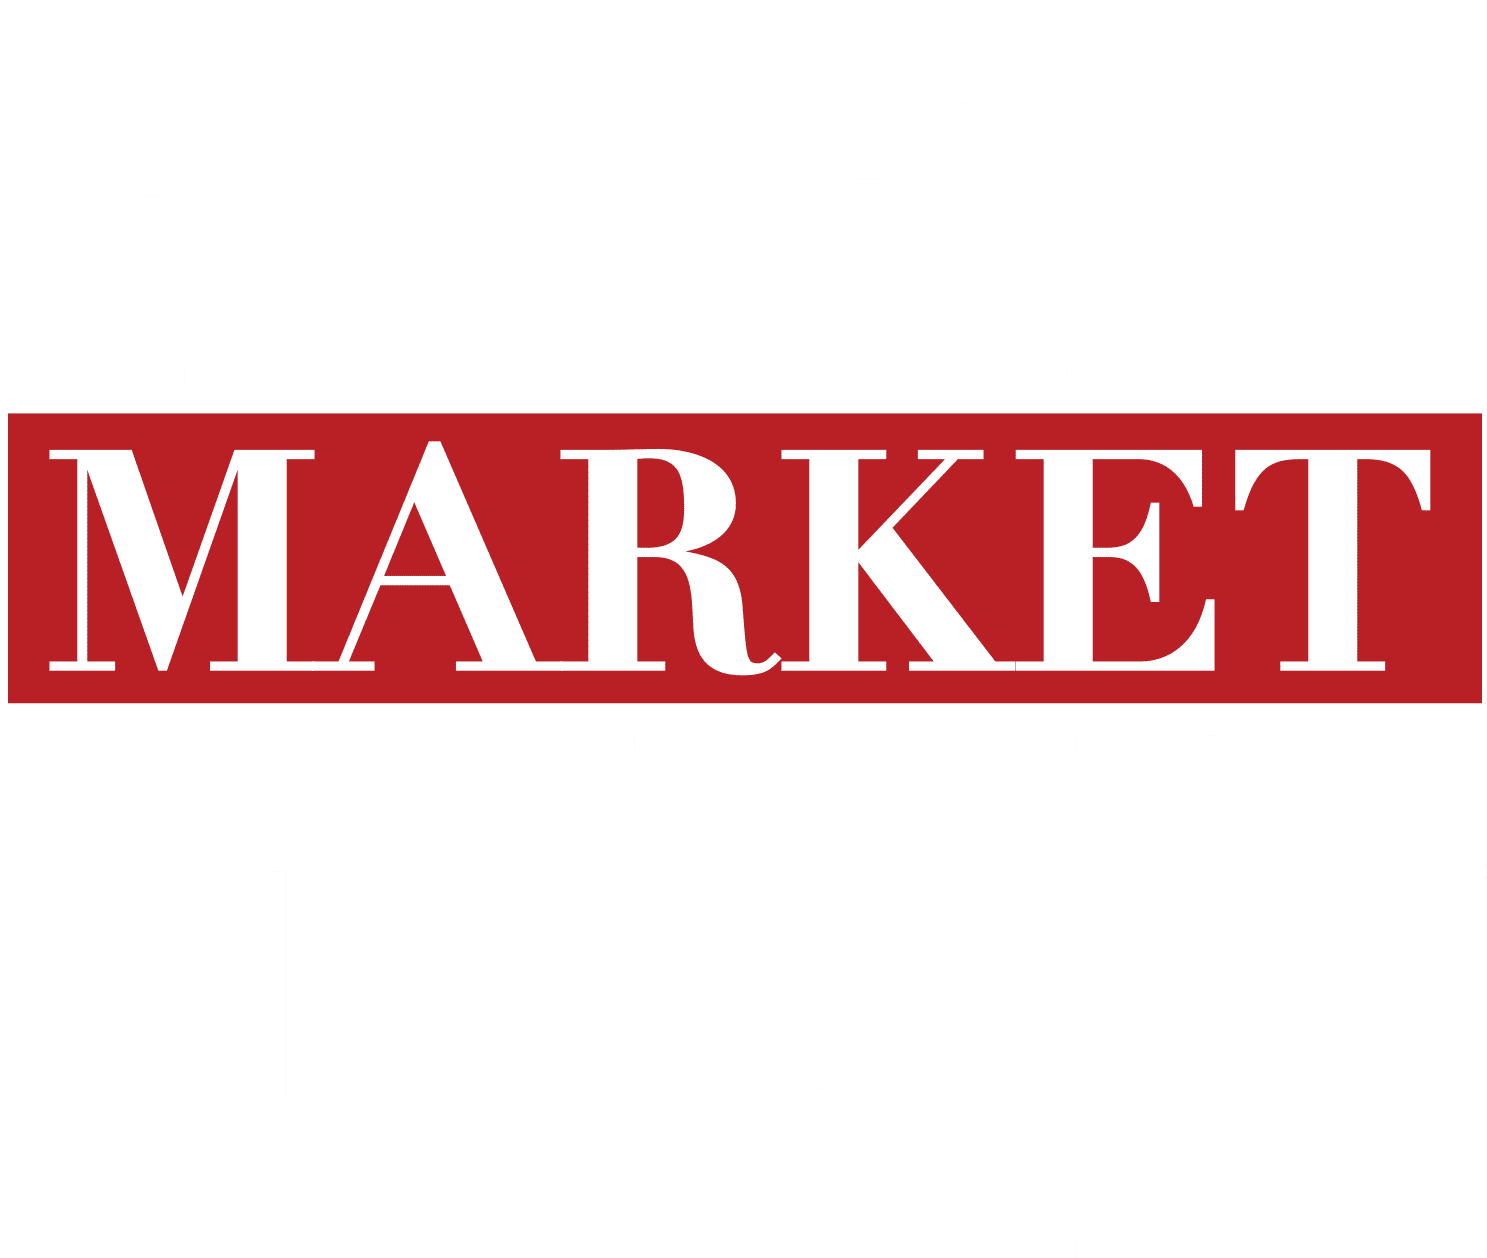 Flea Market Flip logo